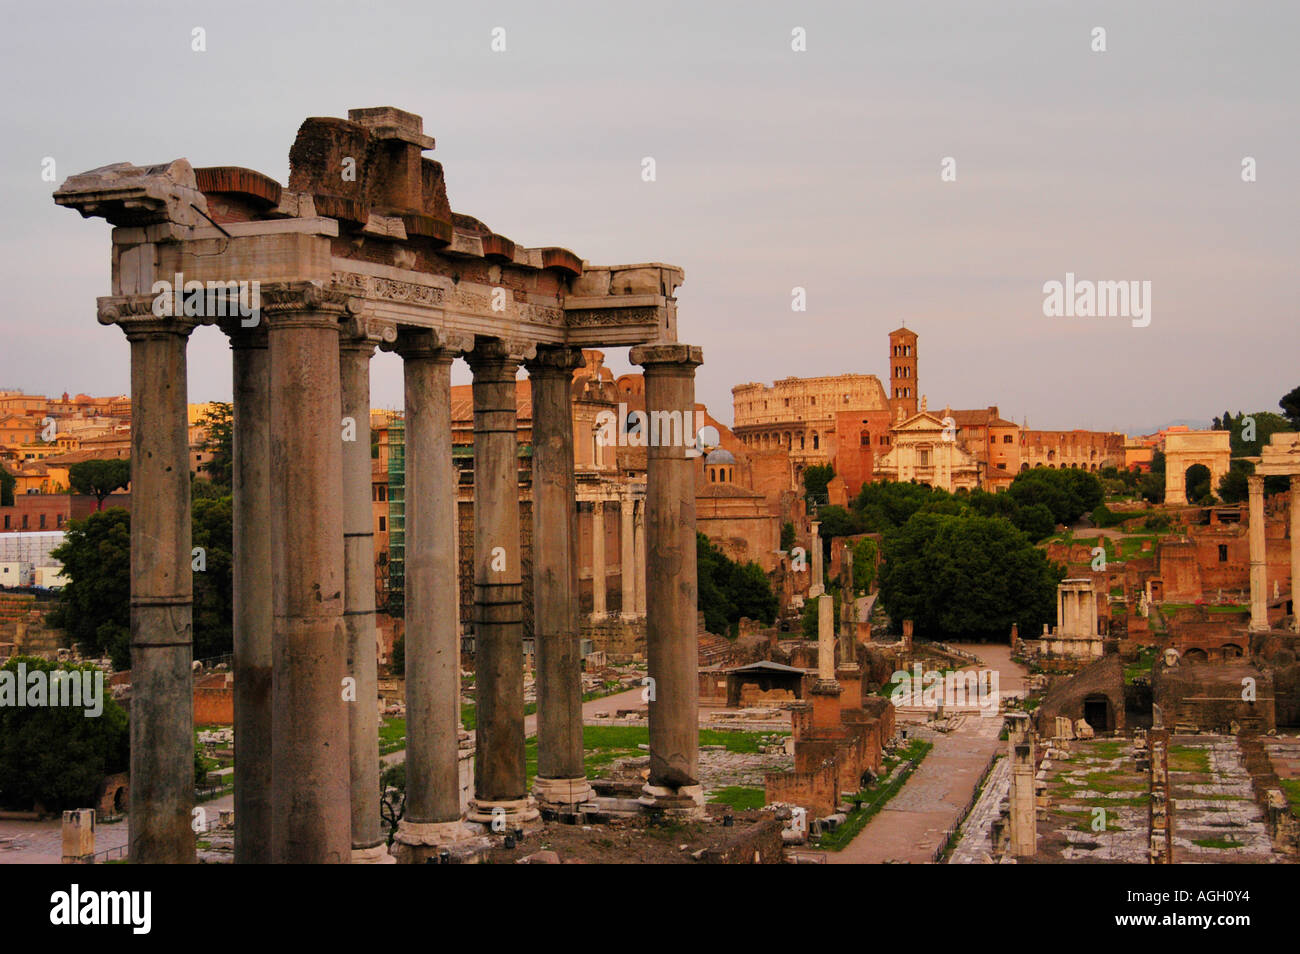 Ruines de l'ancienne Rome, Forum Romain, Foro Romano, Rome, Italie Banque D'Images